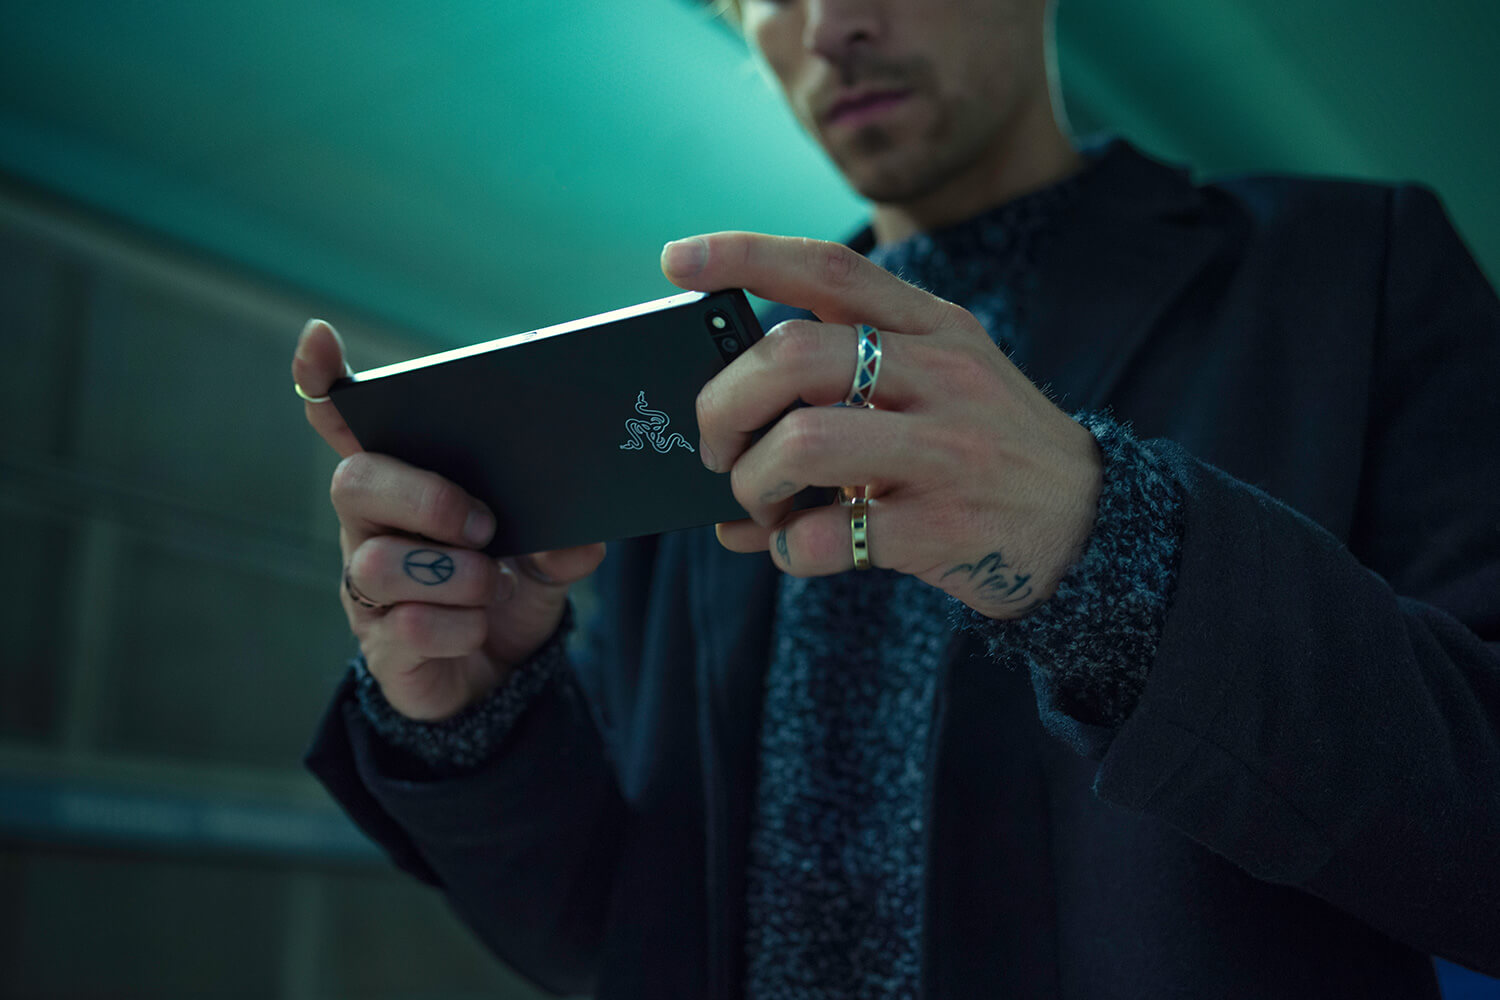 Razer phone announced with Adaptable DIsplay, 8GB RAM 1